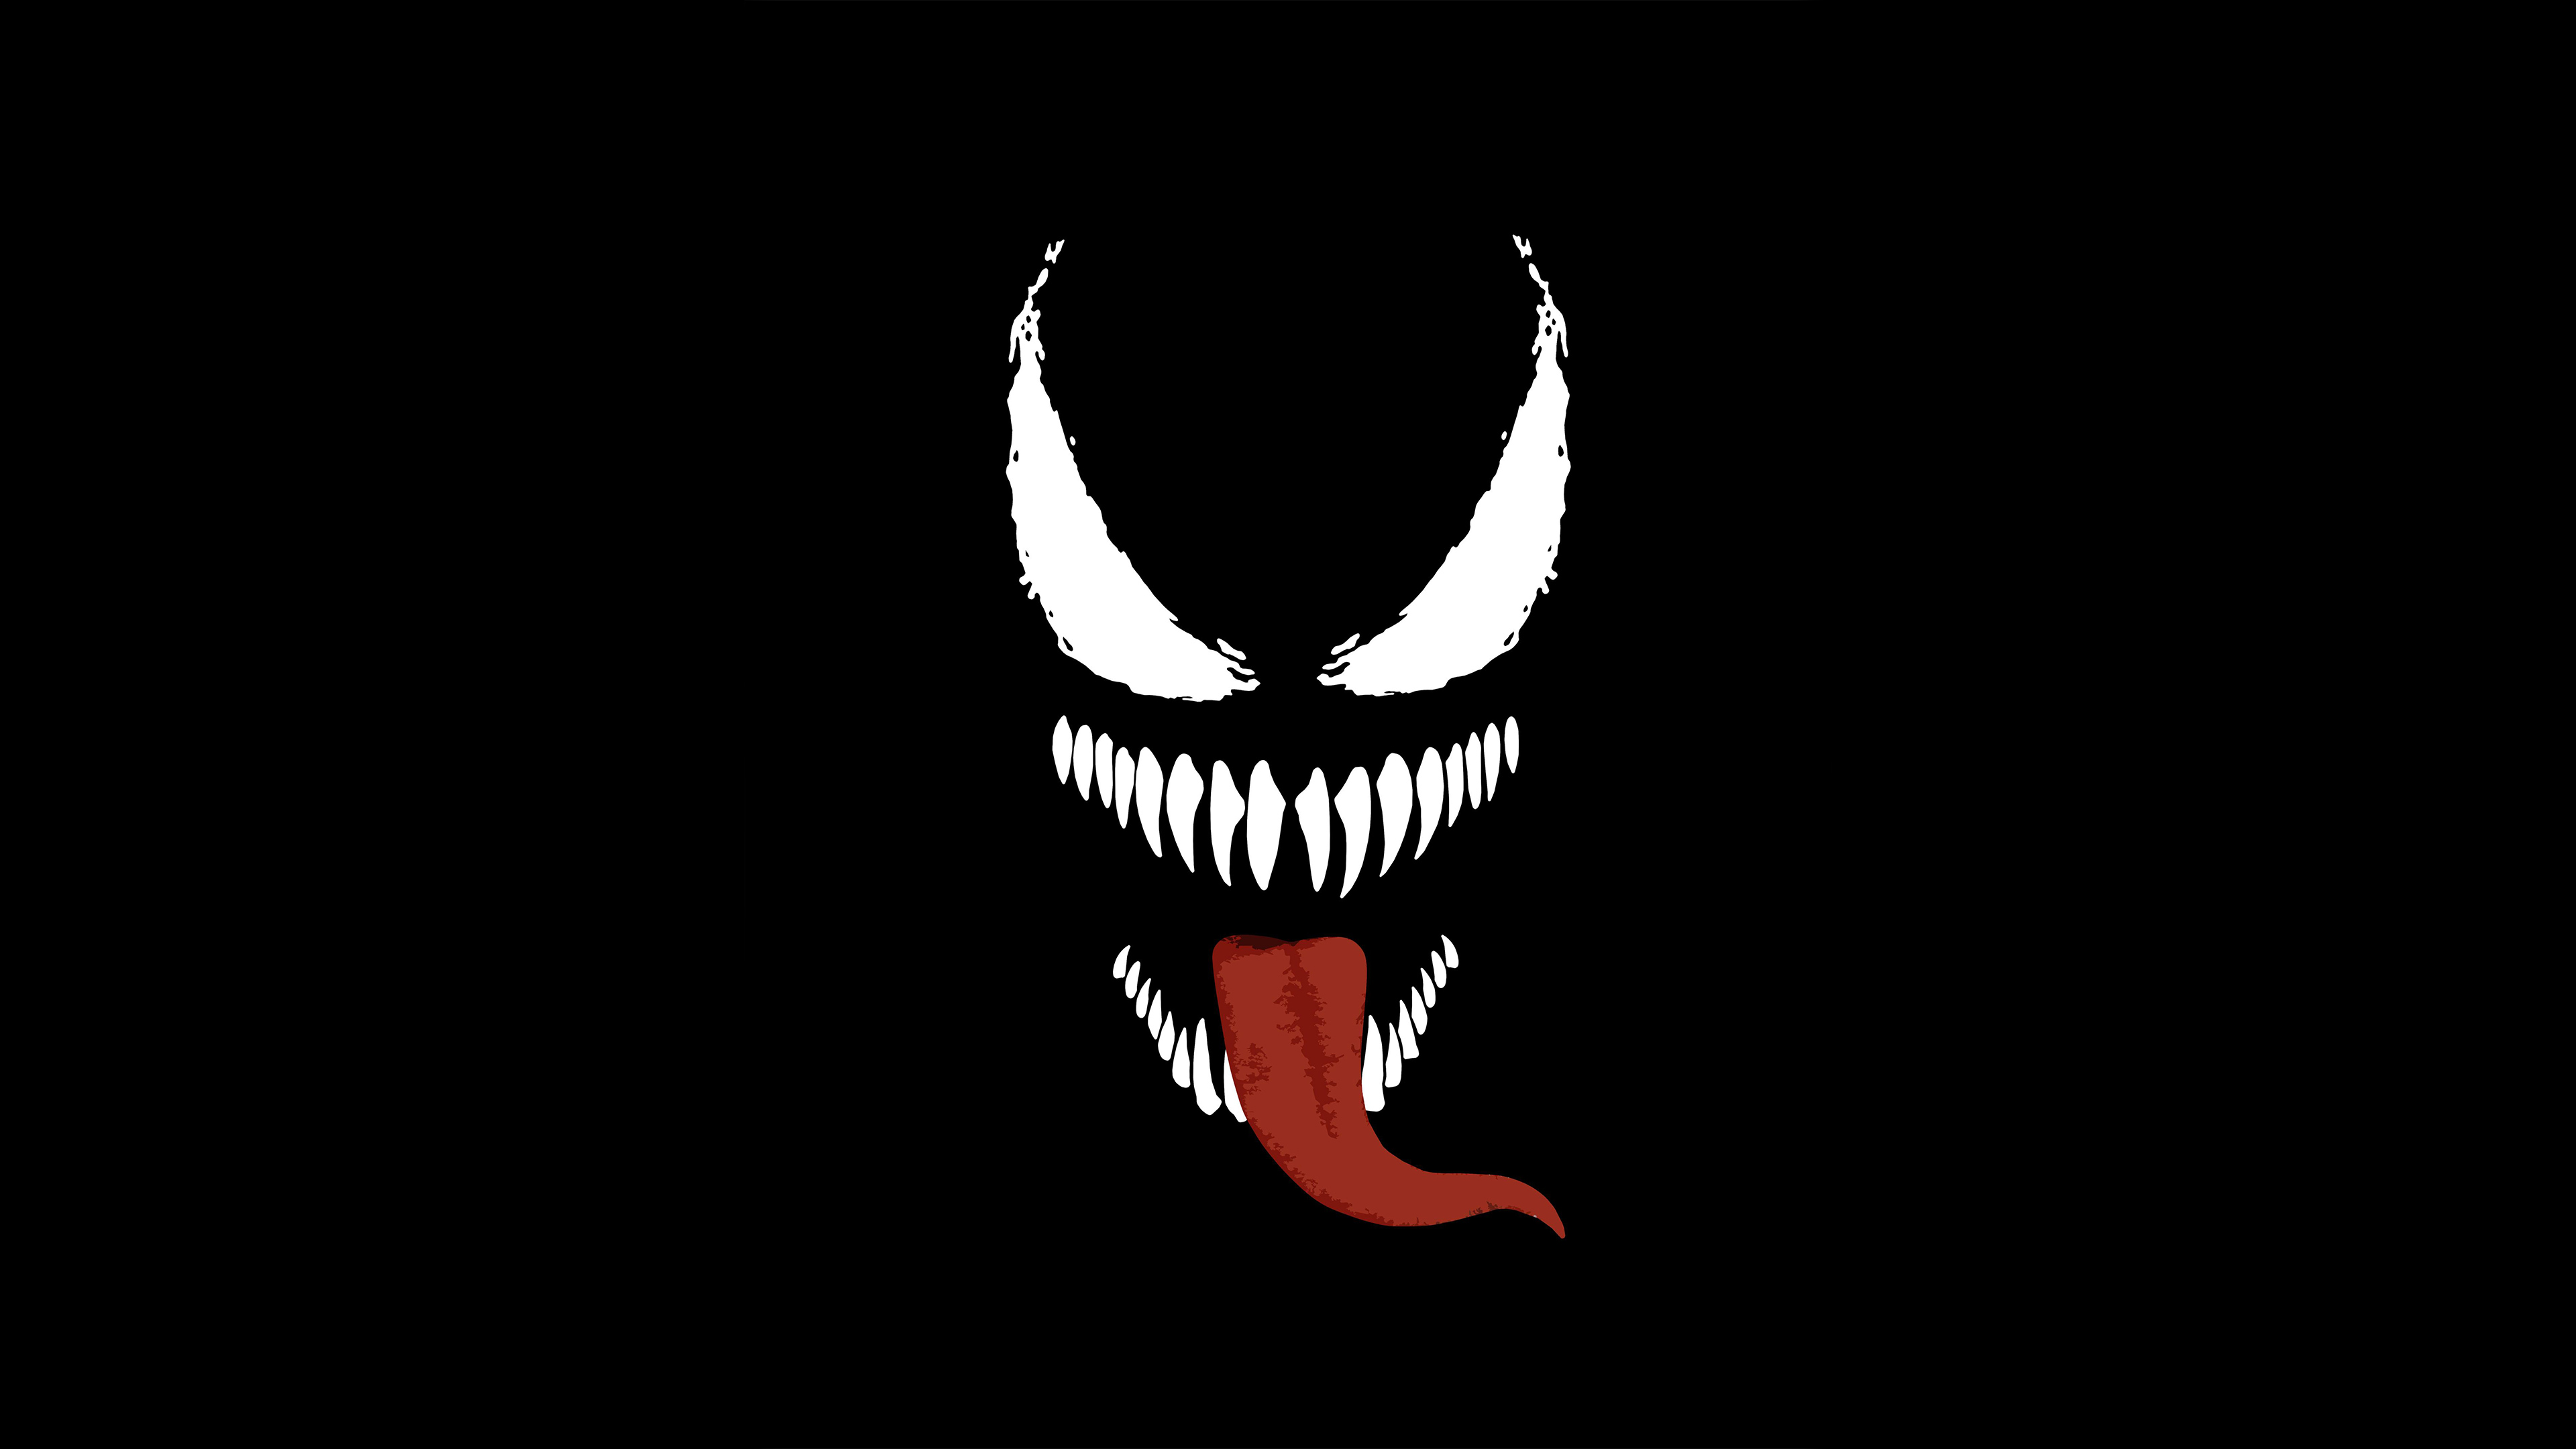 Venom 4k Arts, HD Superheroes, 4k Wallpapers, Images, Backgrounds